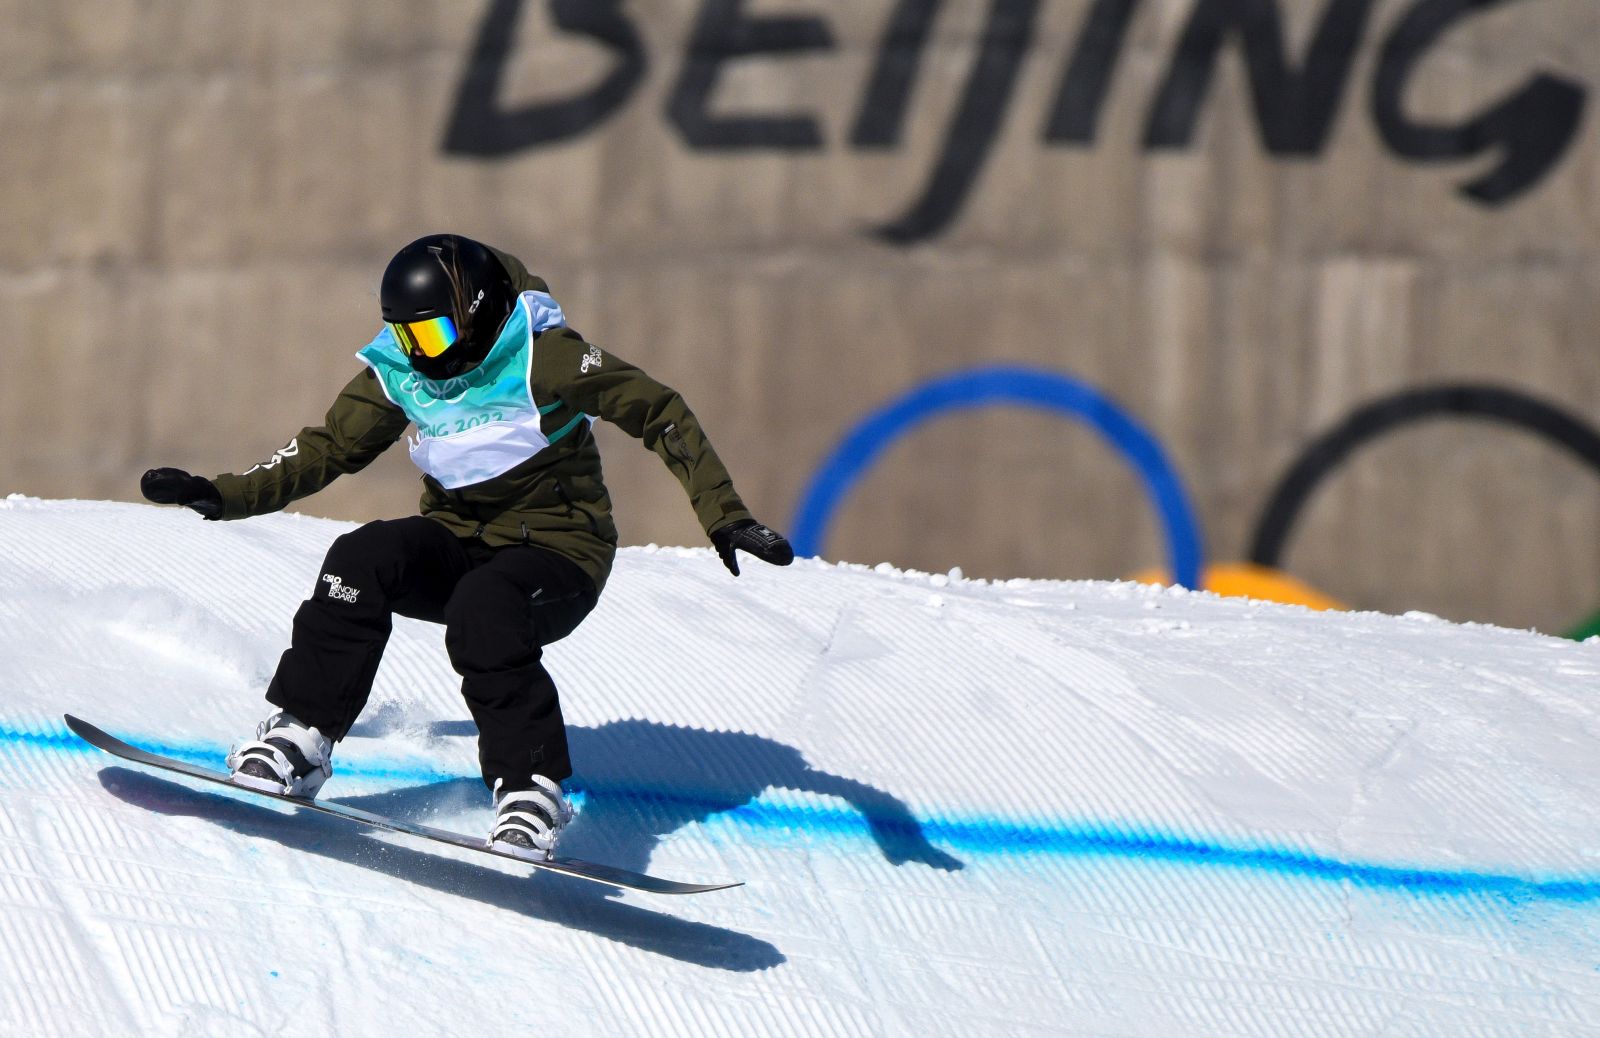 Peking, 14.02.2022 - Hrvatska snowboardaica Lea Jugovac tijekom natjecanja kvalifikacije snowboarda Big Air na Olimpijskim igrama Peking 2022.
foto HINA/ HOO/ Jaki Franja/ ds